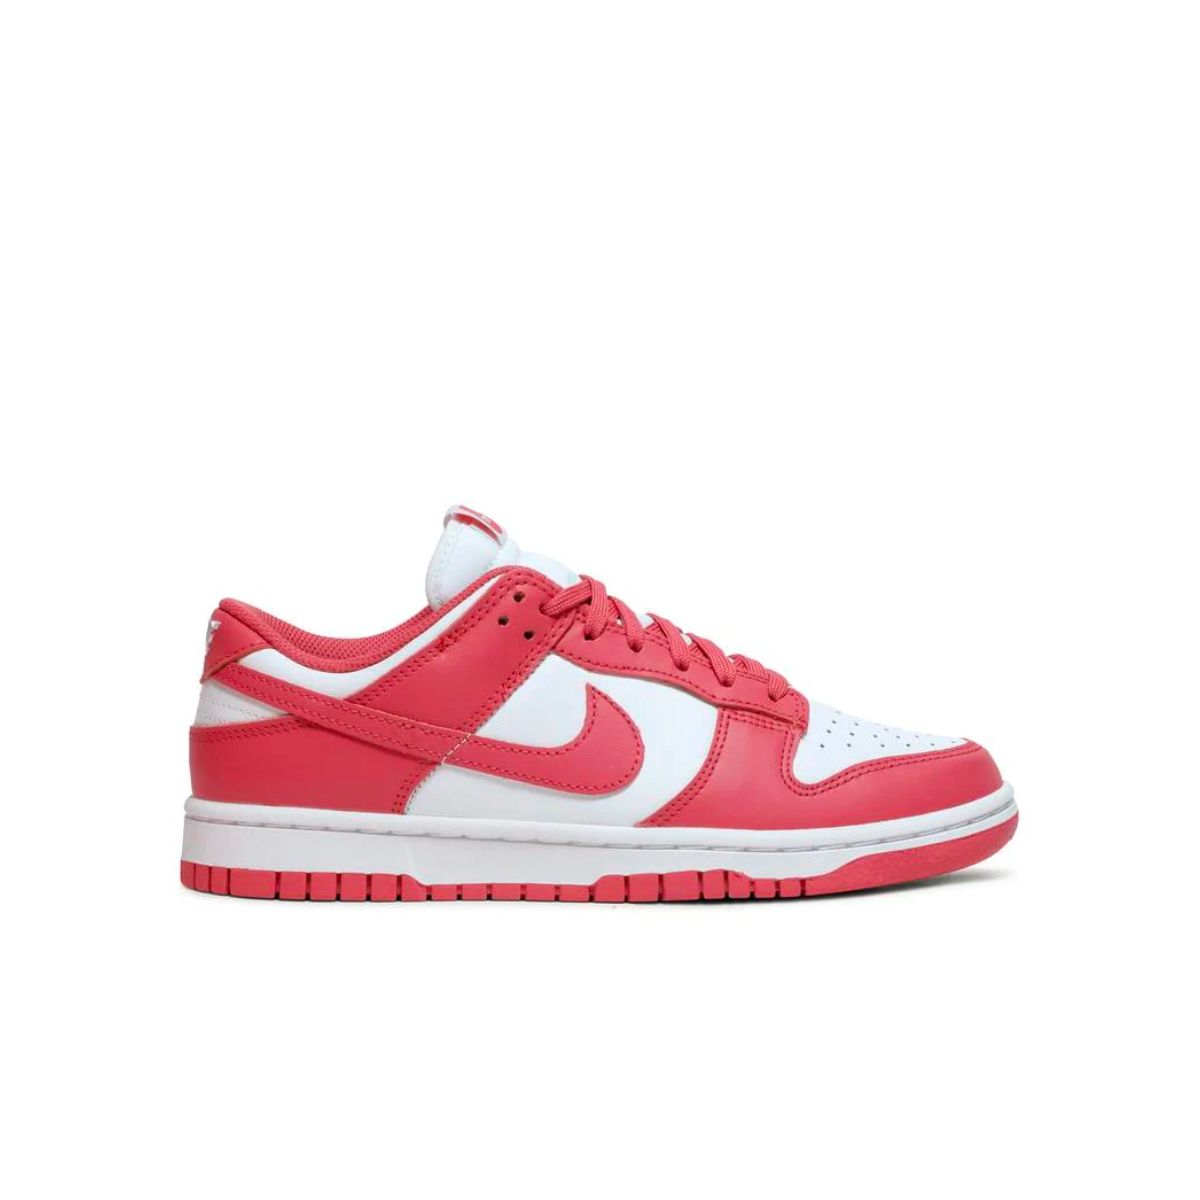 Rose Pink Nike Dunks Shoelace Replacements - Kicks Shoelaces